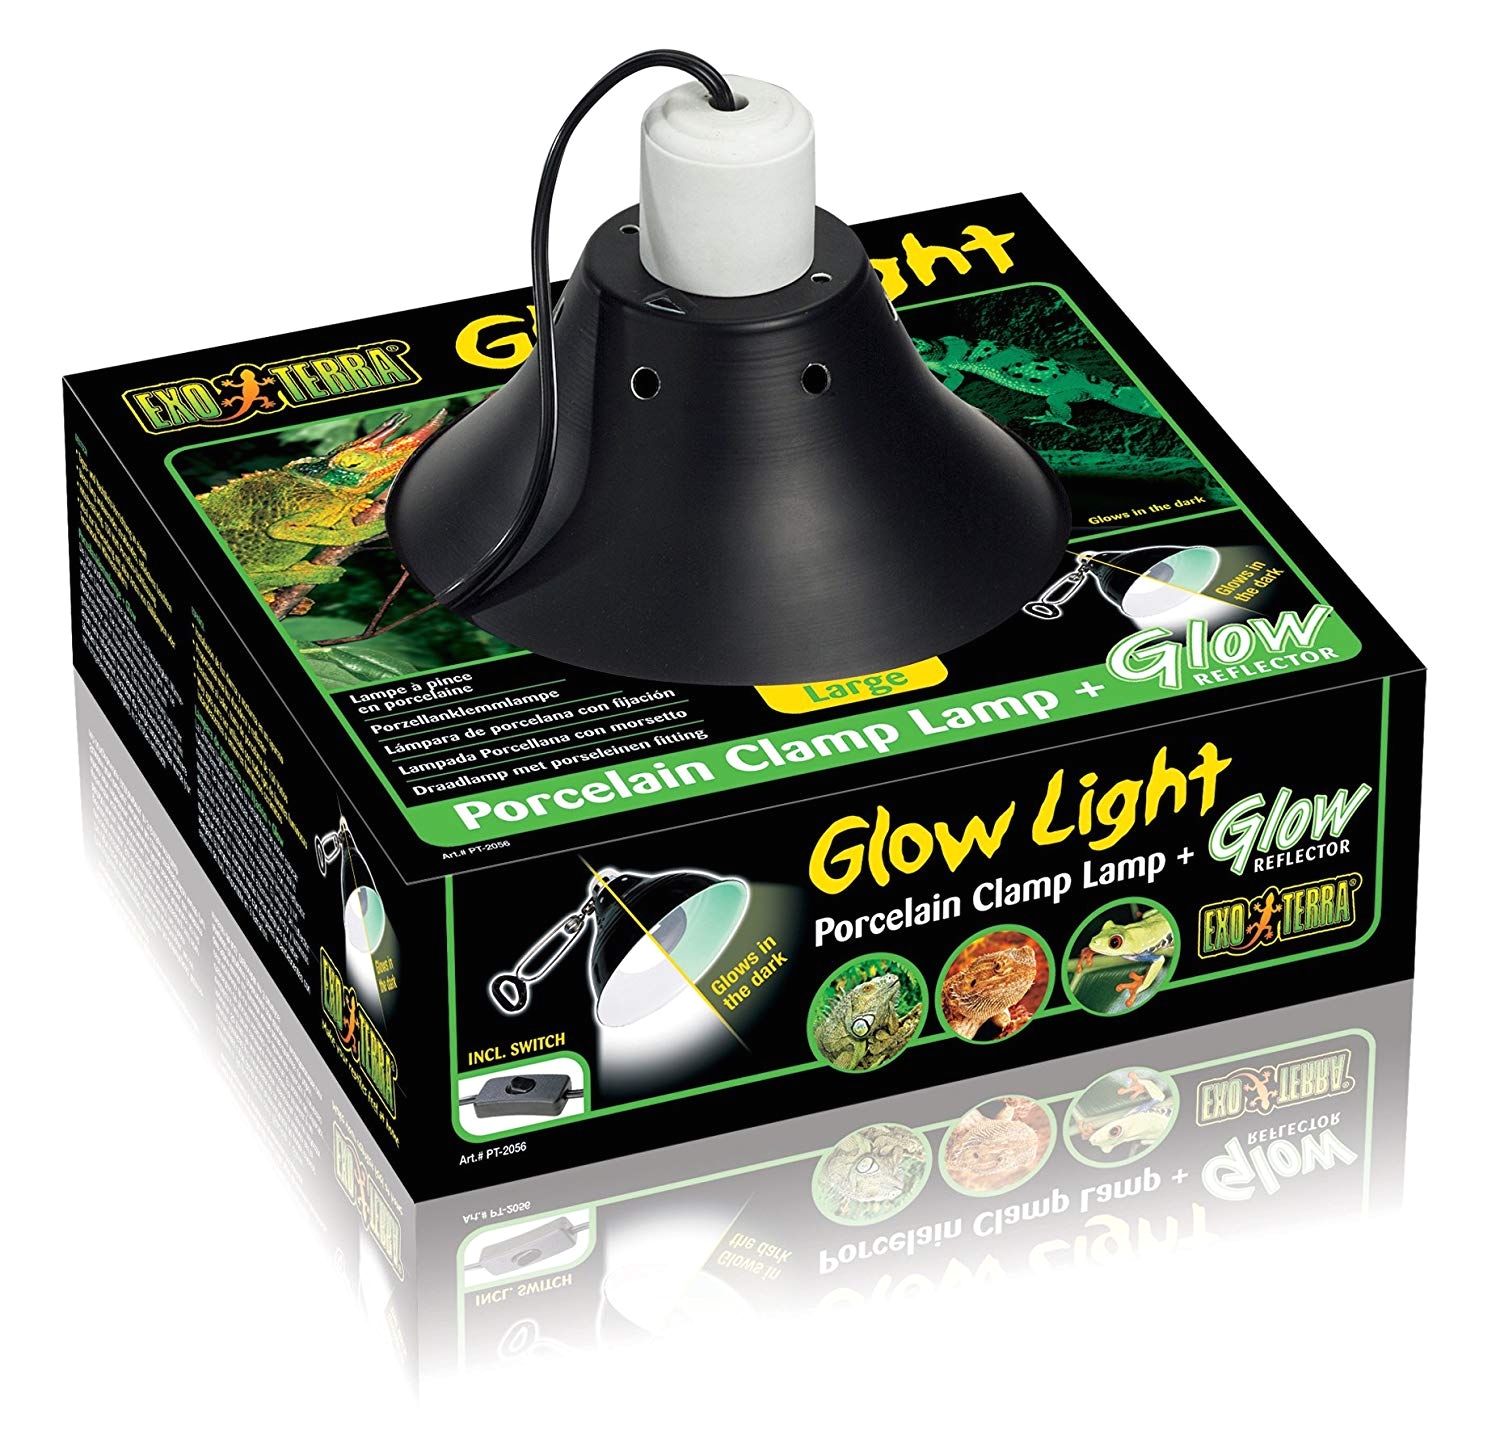 amazon com exo terra glow light porcelain clamp lamp 5 5 inches pet habitat lights pet supplies